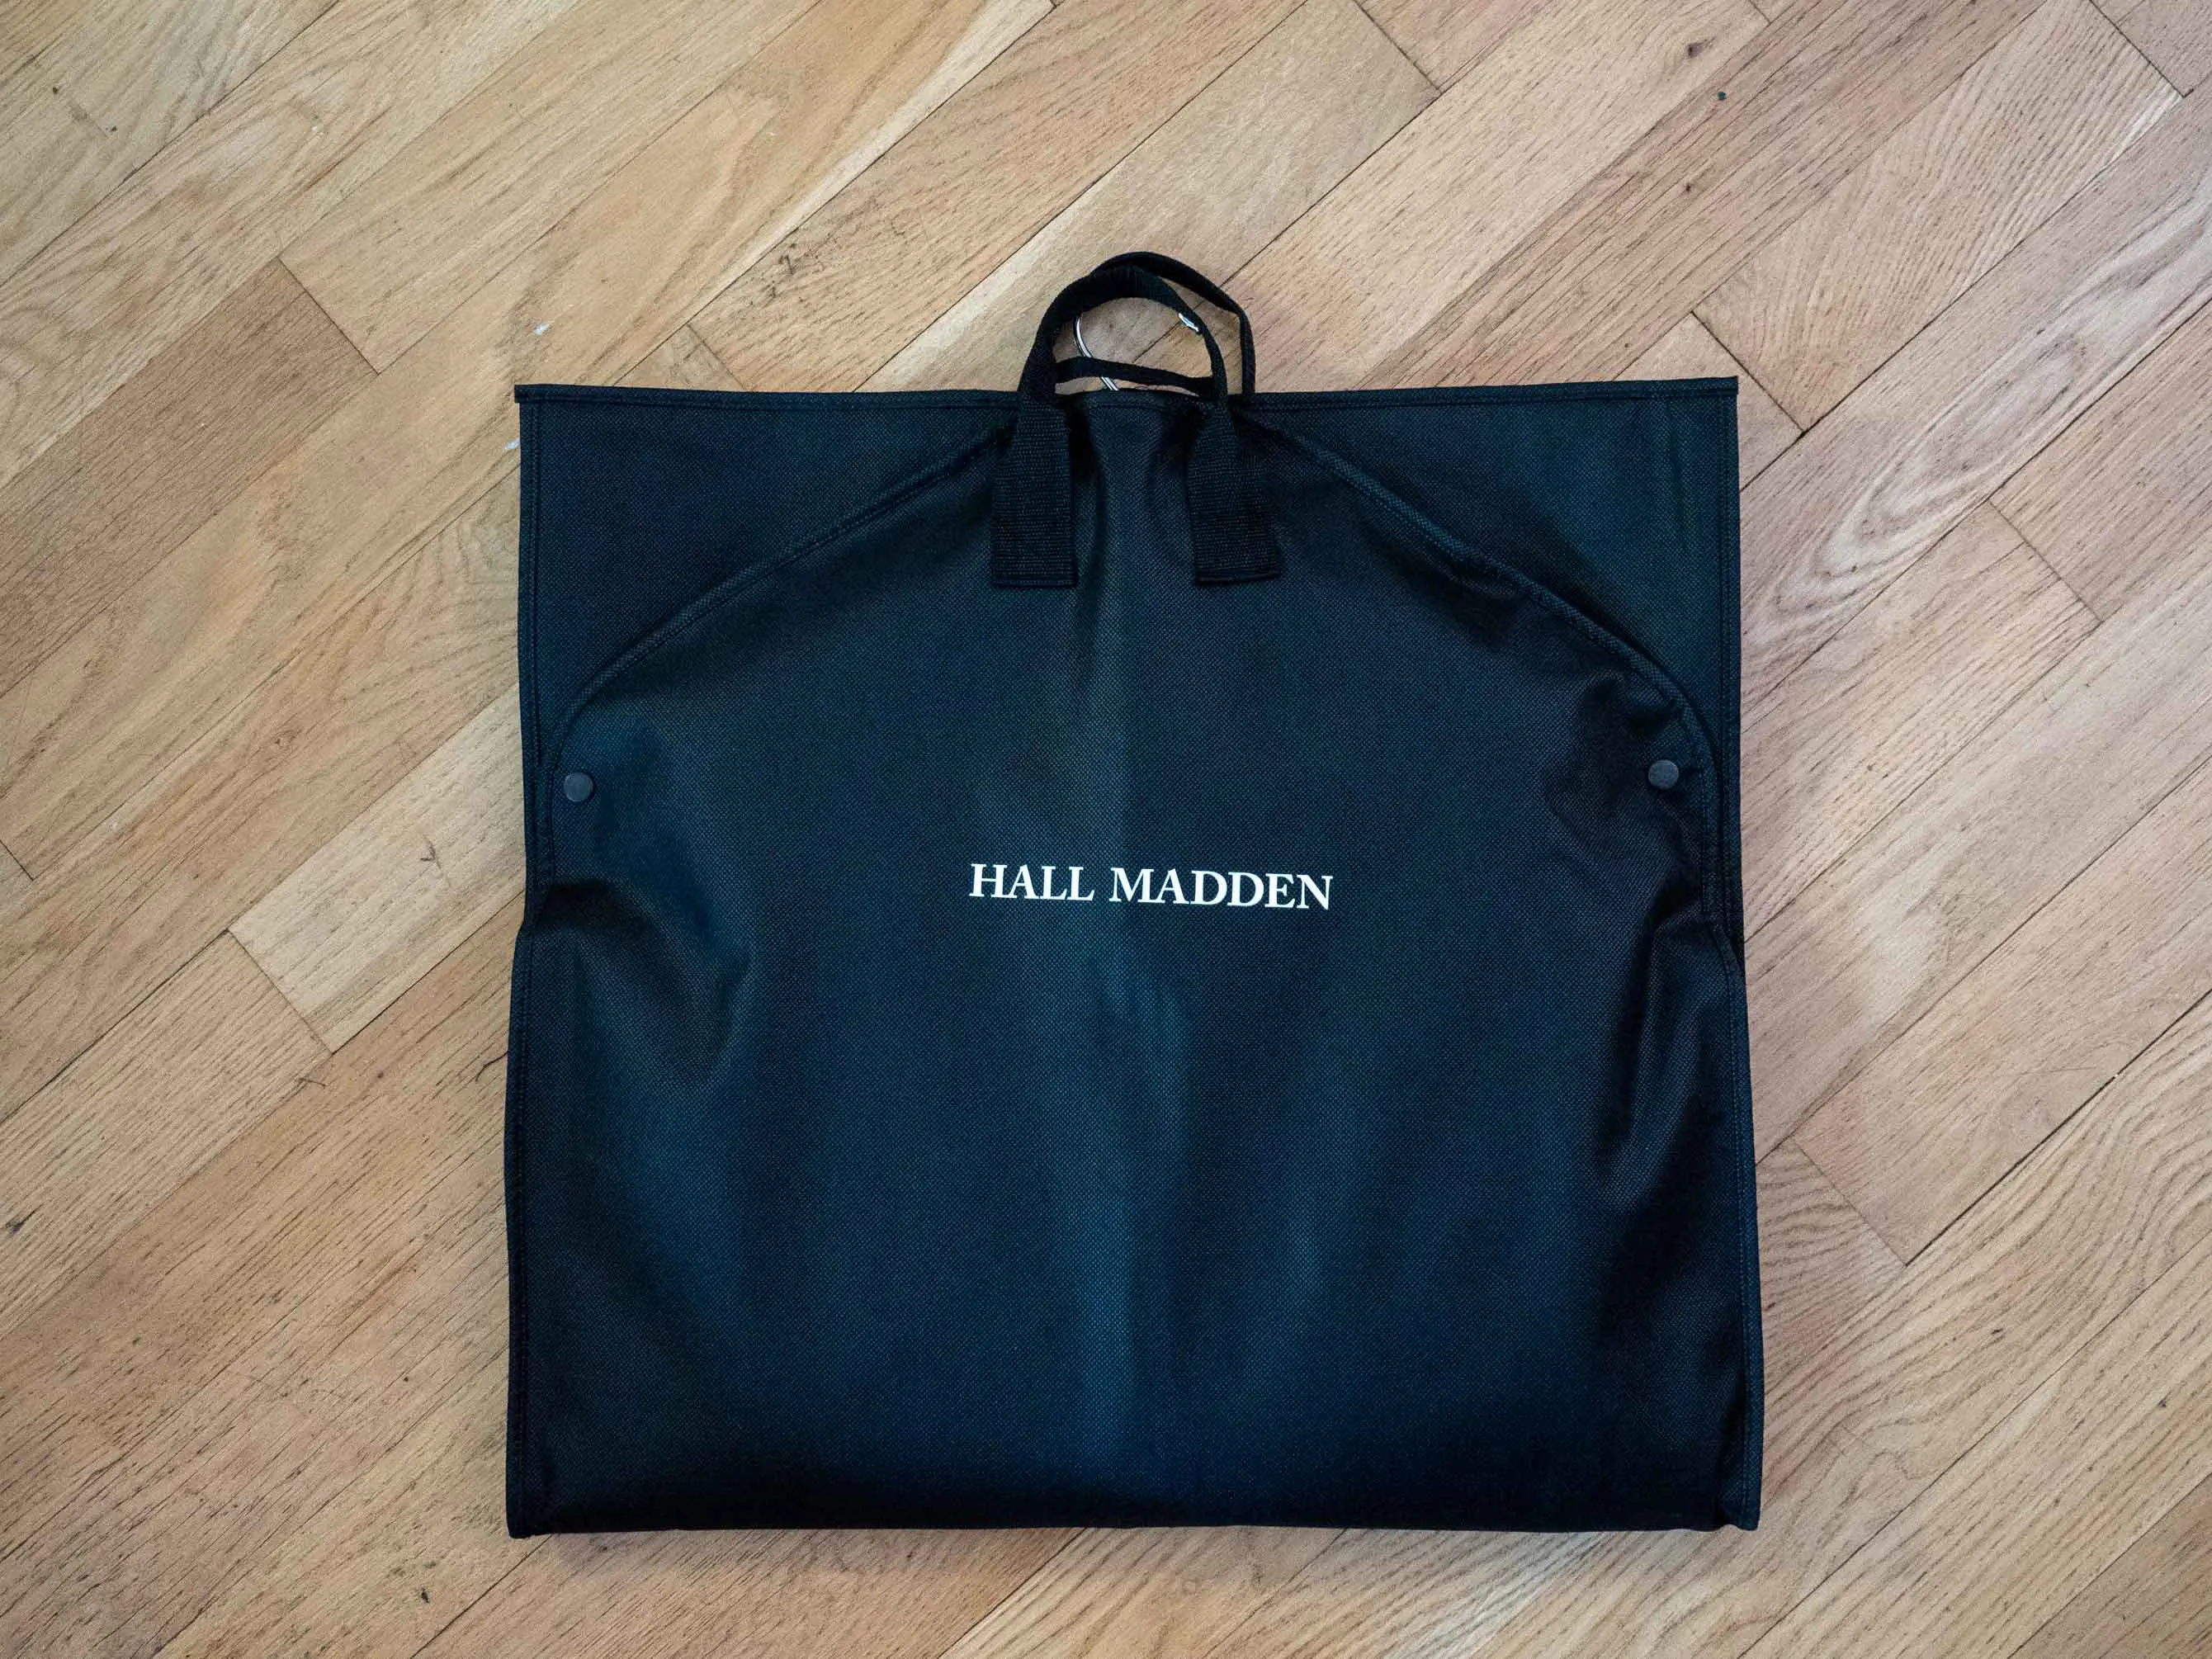 Hall Madden garment bag